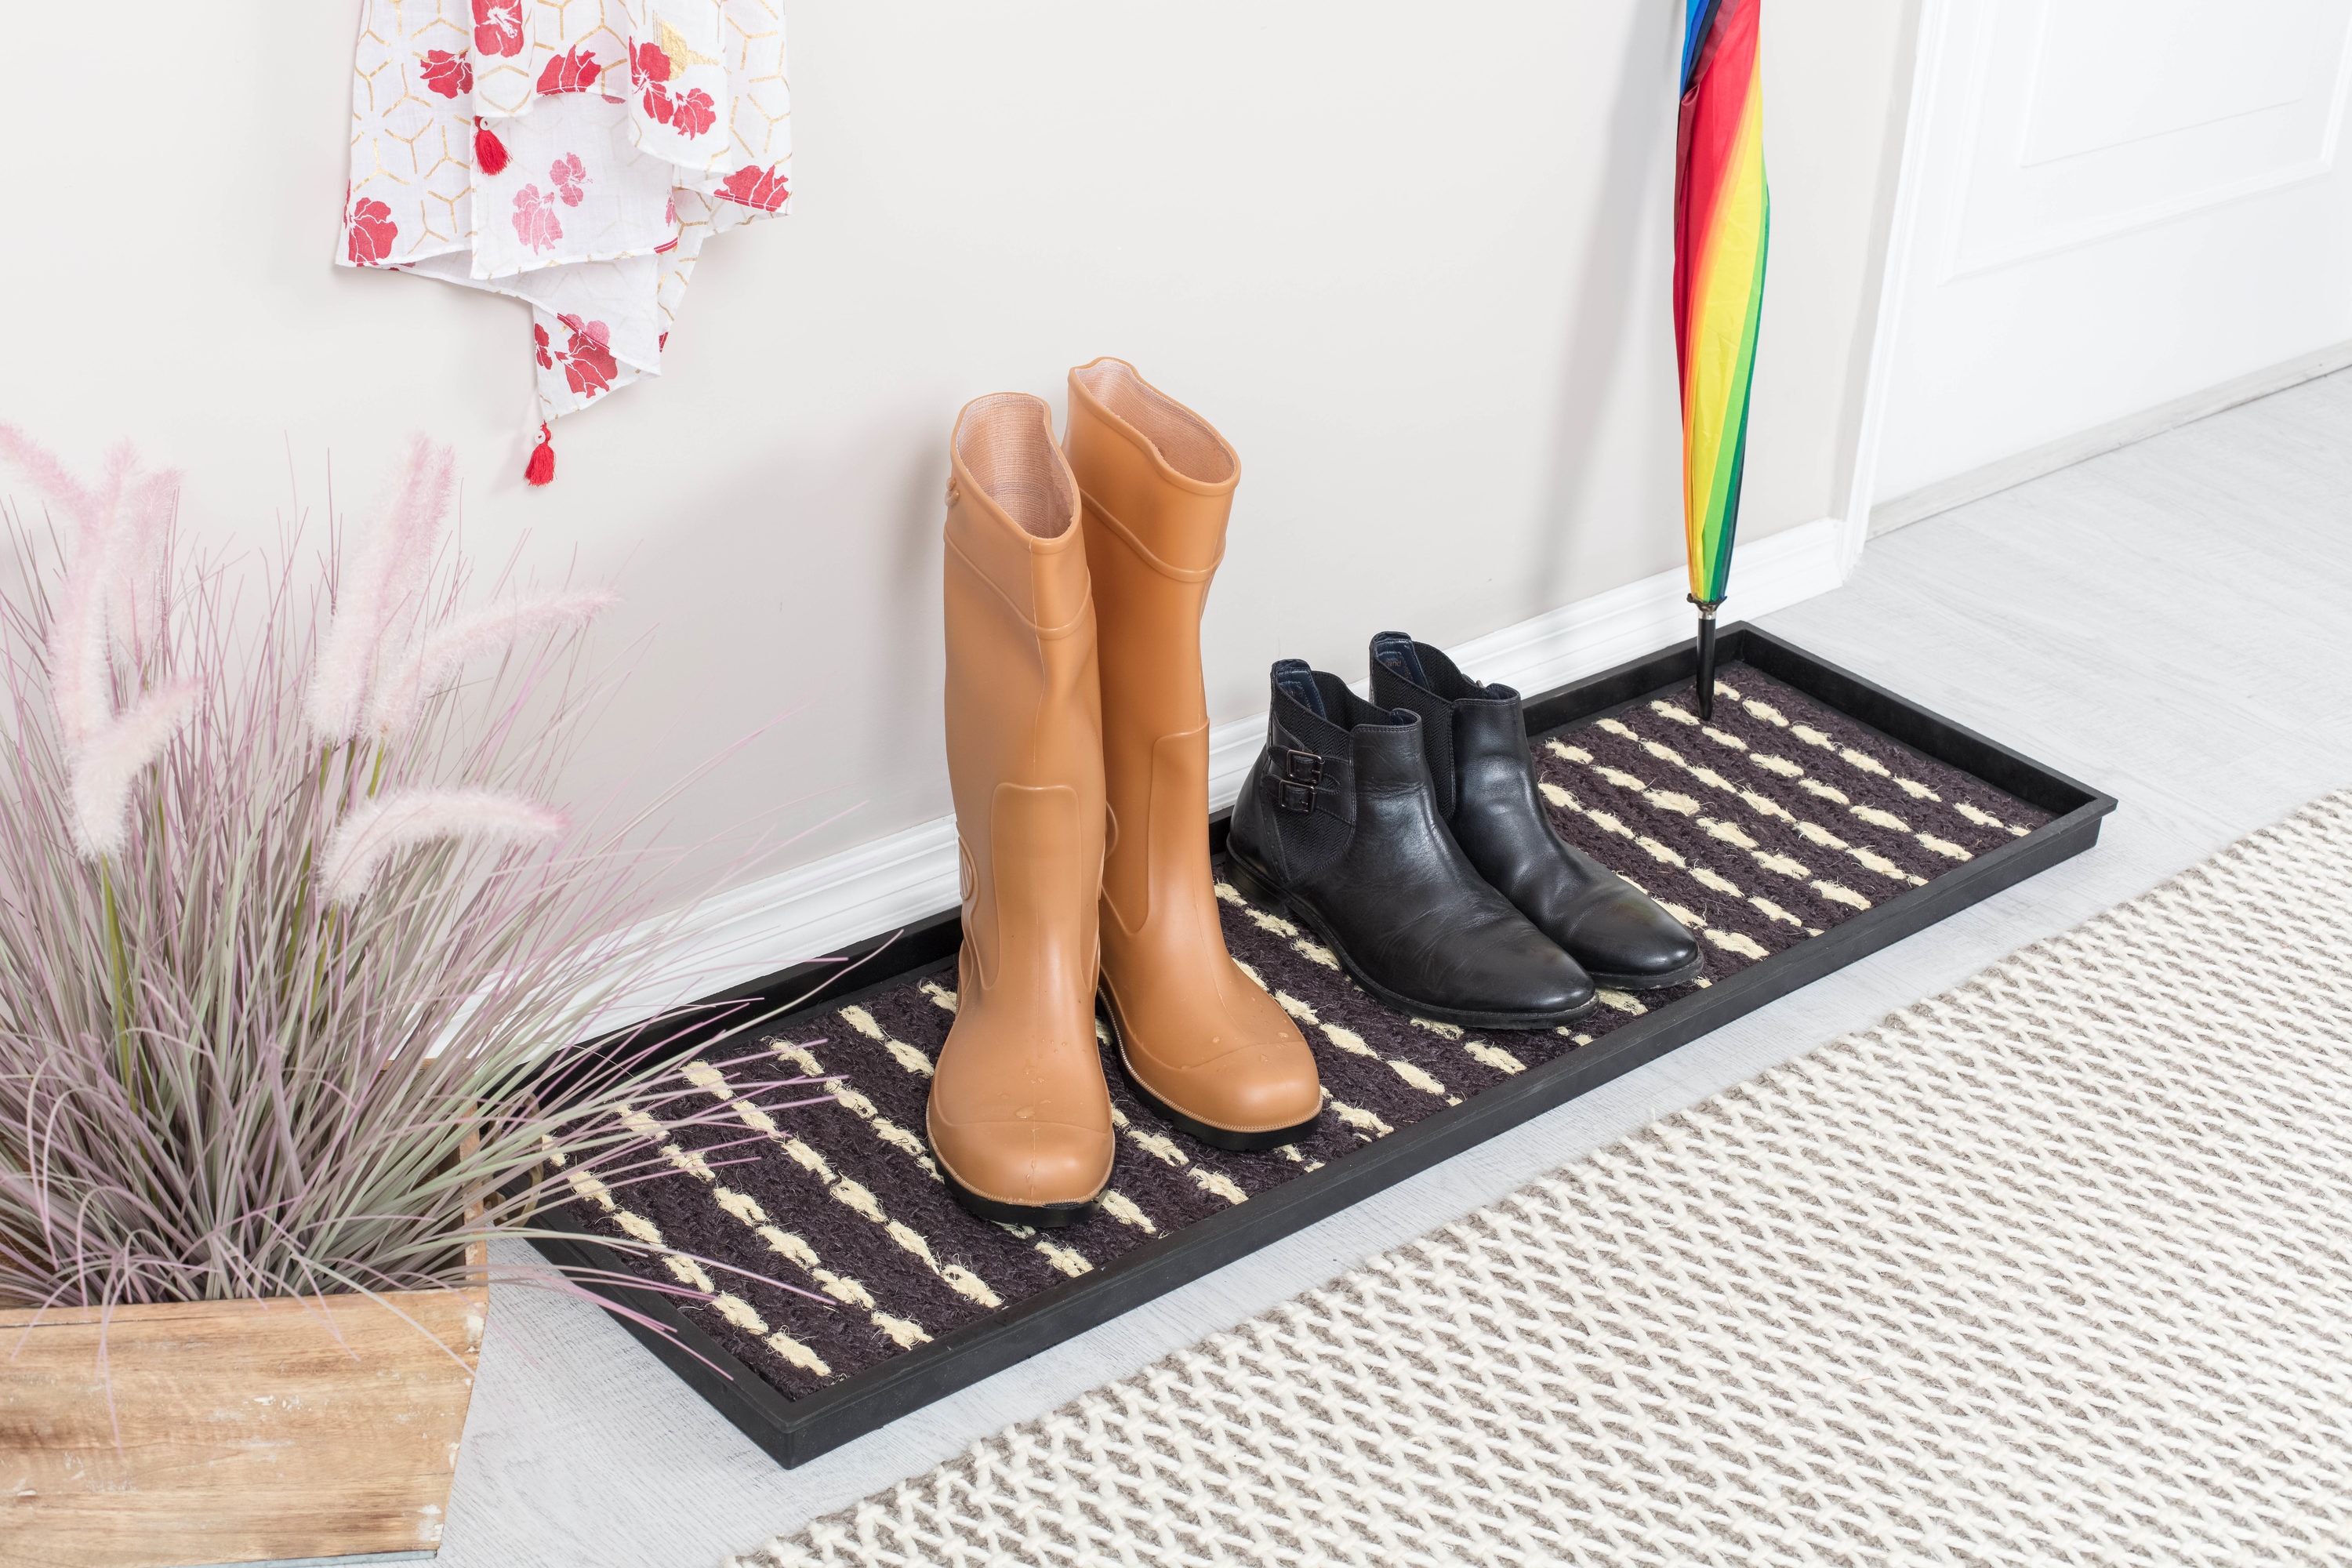 Ottomanson Easy Clean, Waterproof Indoor/Outdoor Rubber Boot Tray